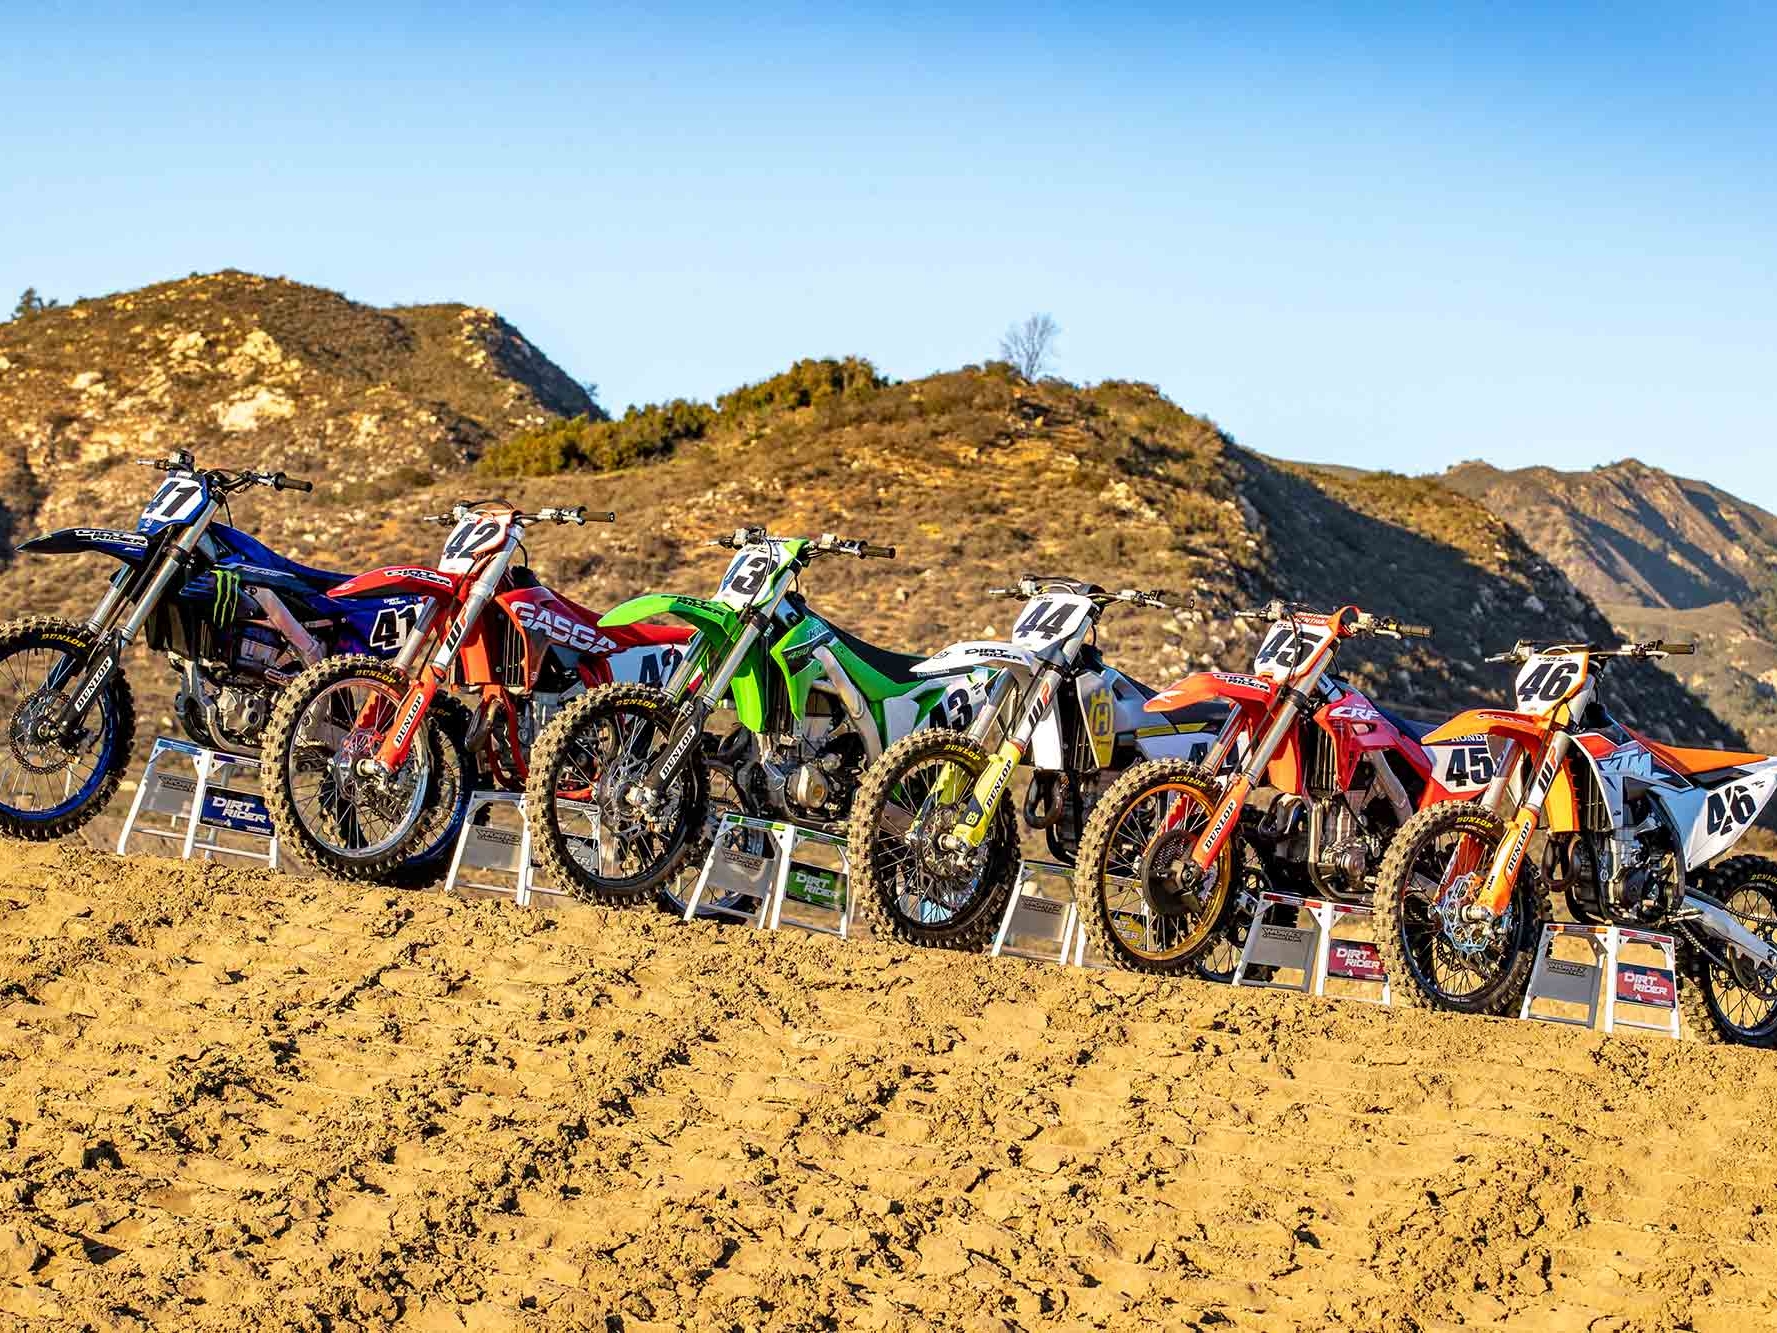 Motocross, Dirt Bike, Enduro, Supercross, Racing Dirt Rider